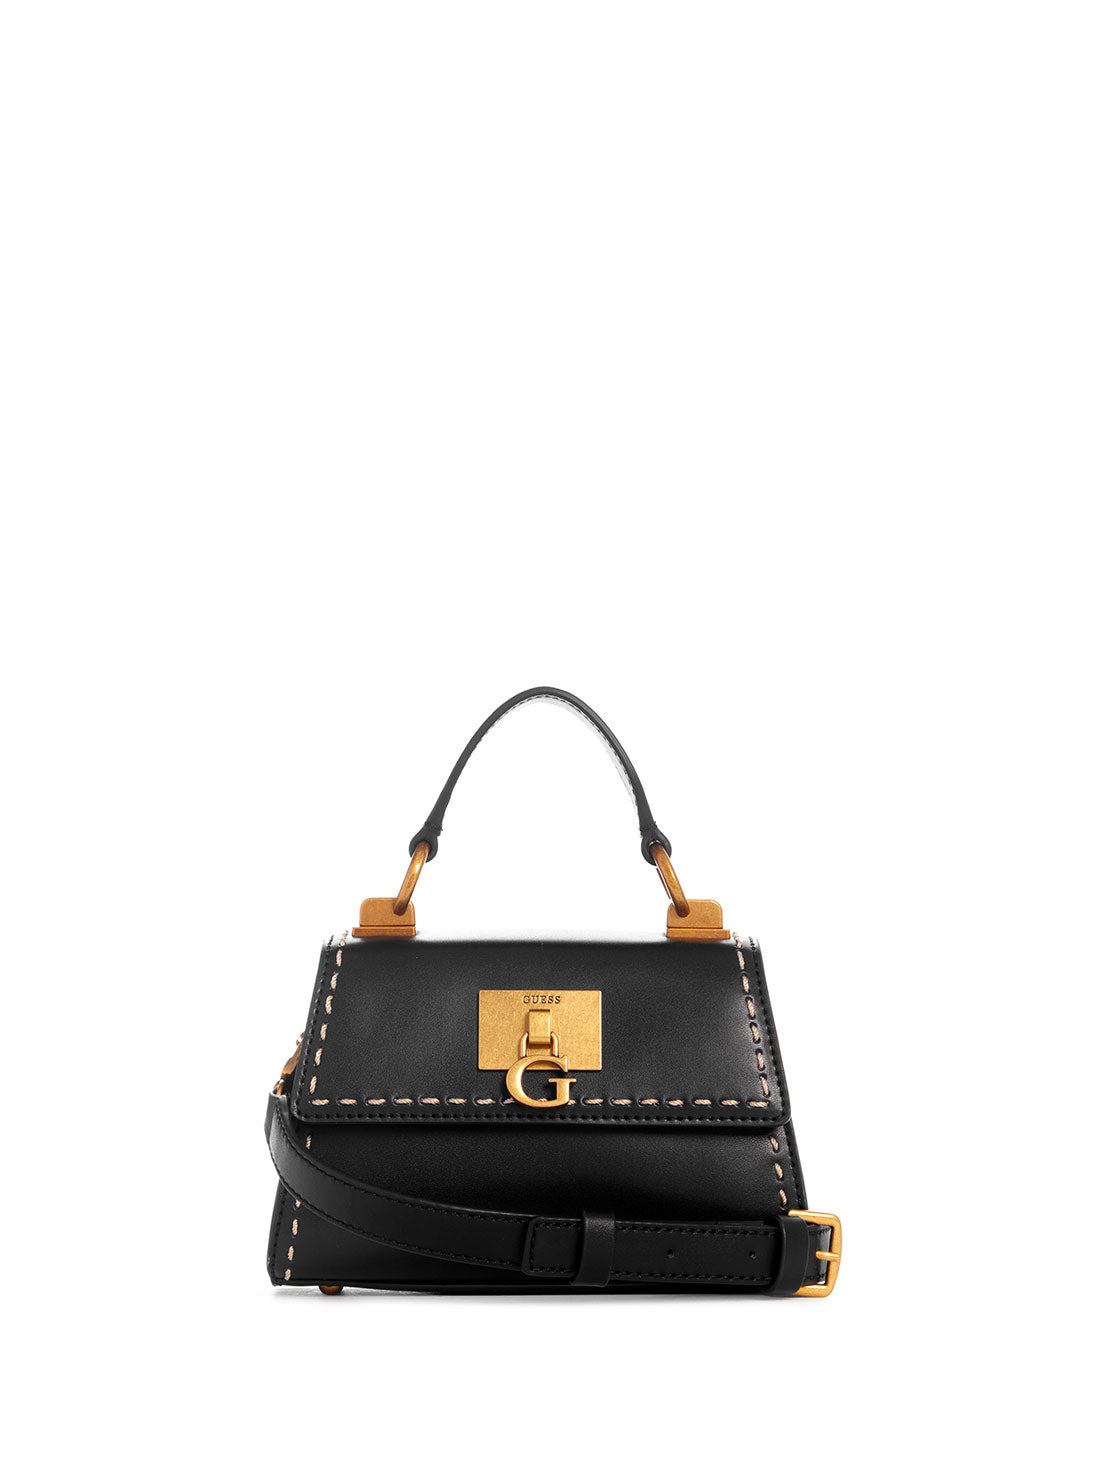 GUESS Women's Black Stephi Mini Crossbody Bag VB787577 Front View